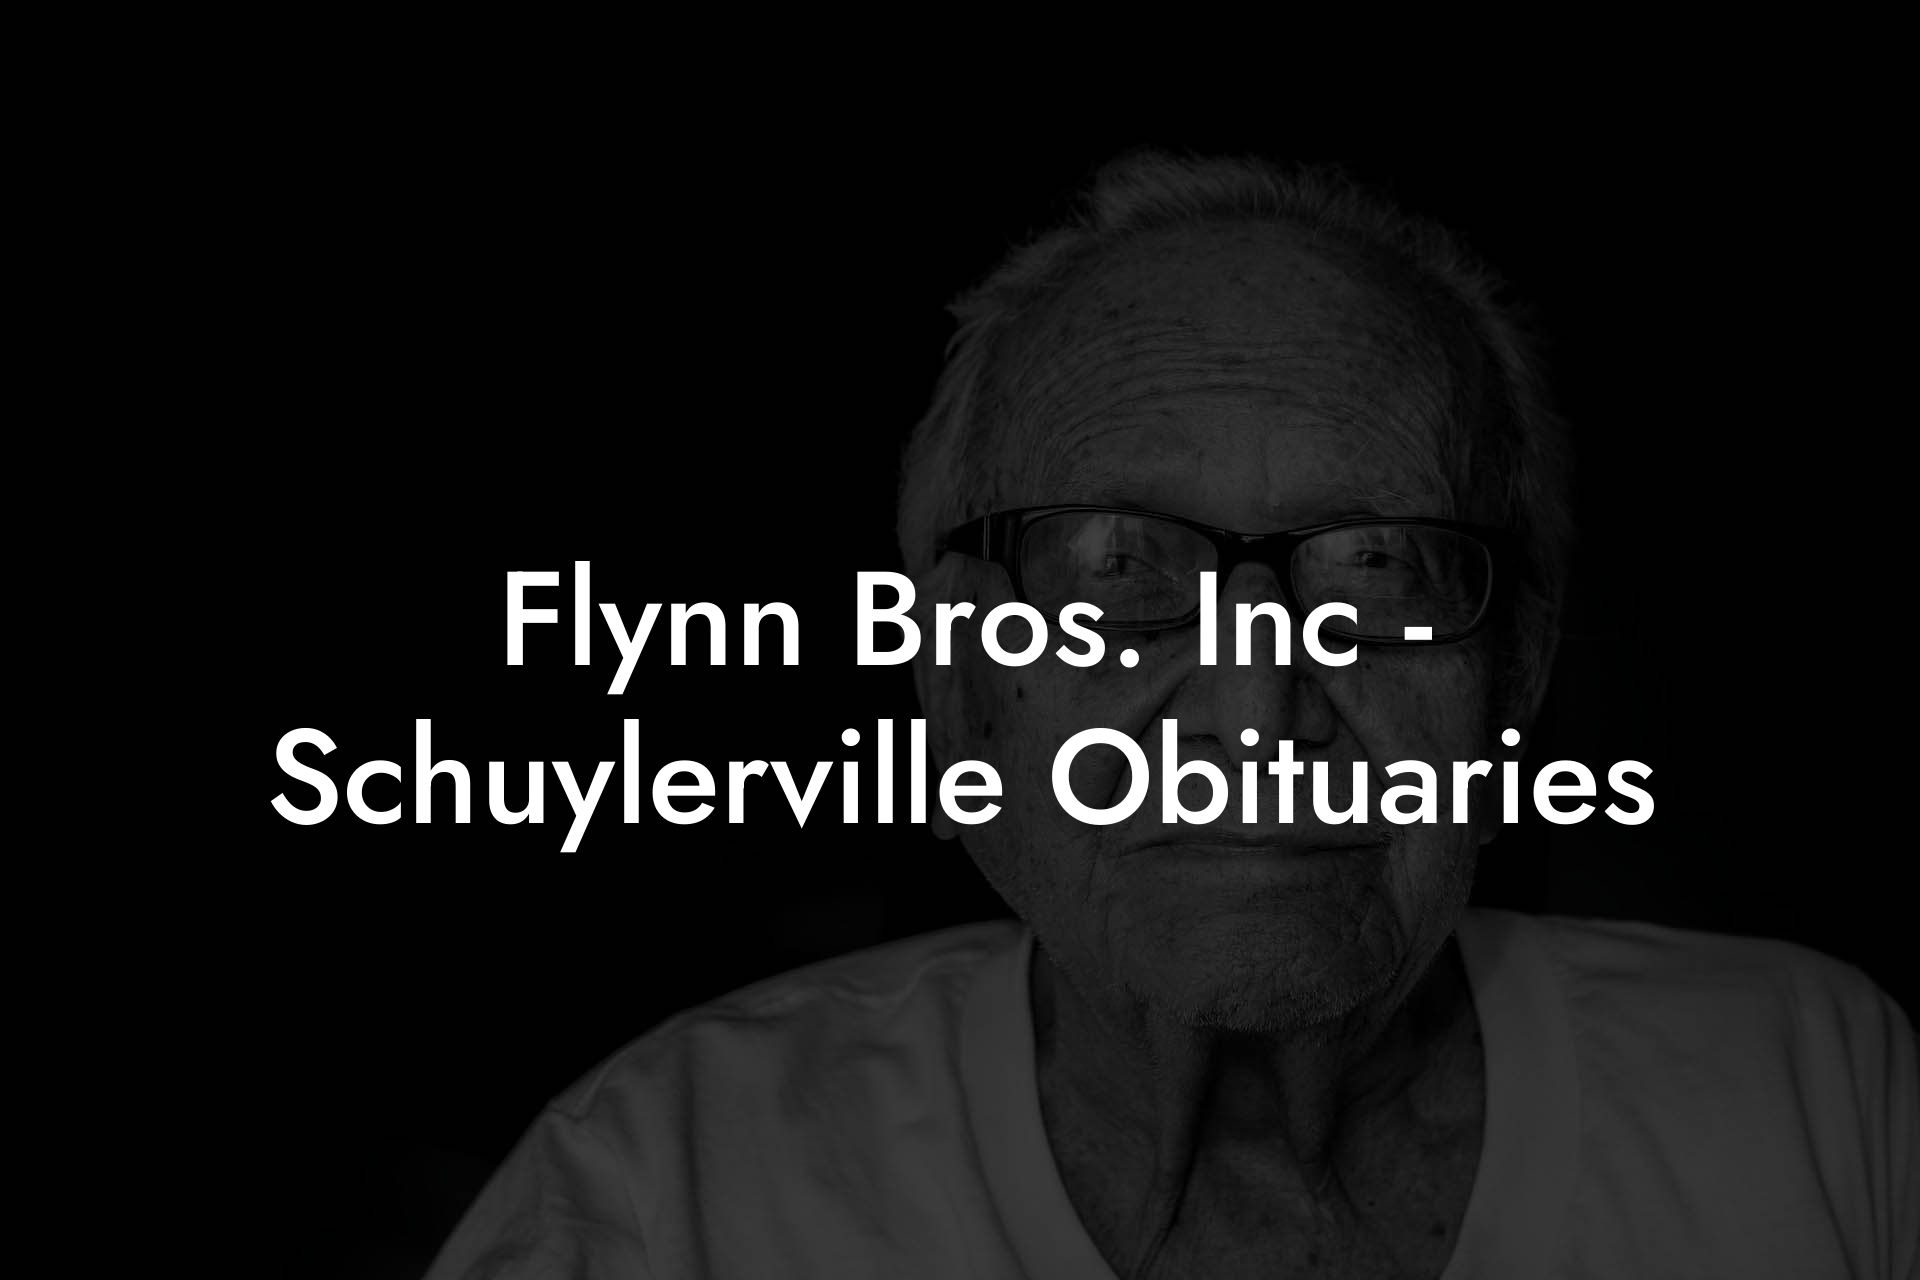 Flynn Bros. Inc - Schuylerville Obituaries